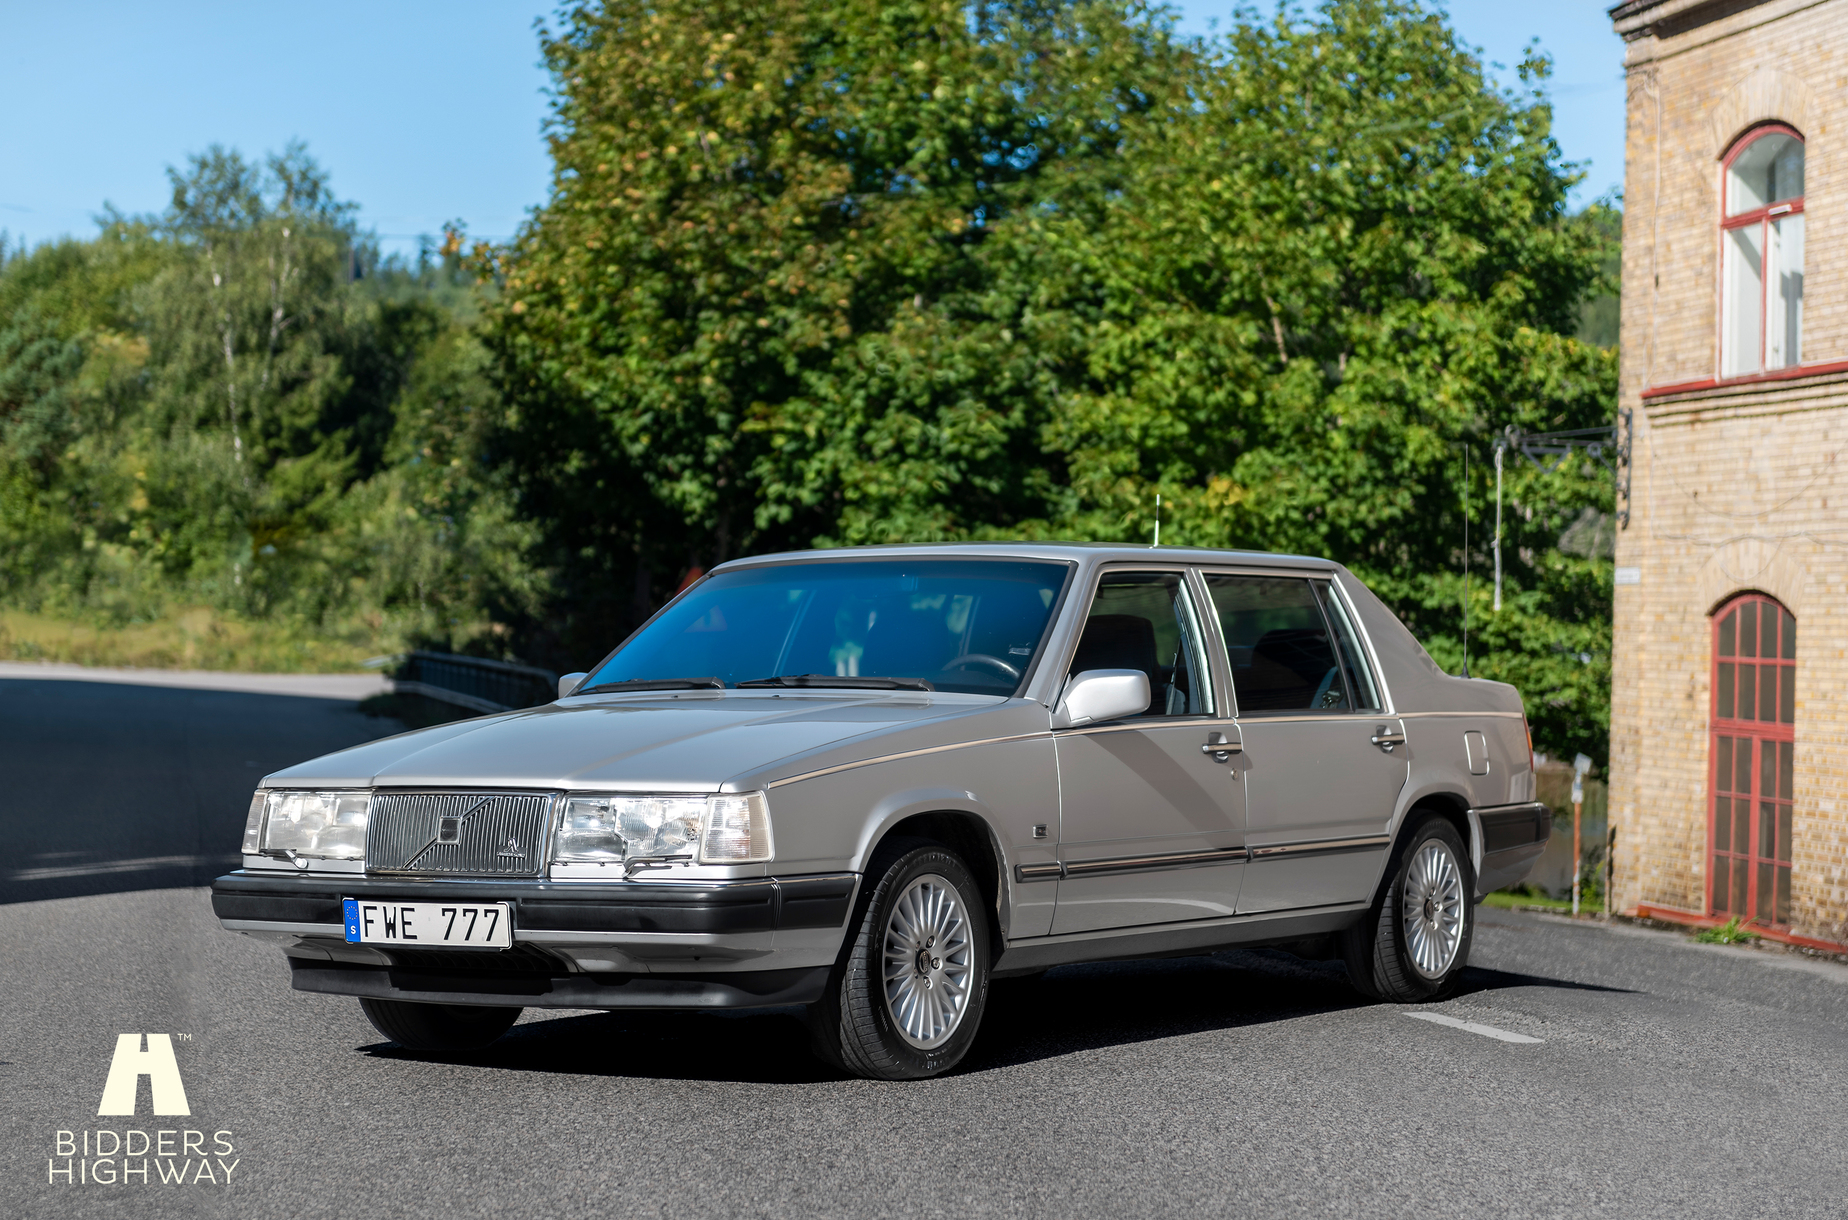 1991 Volvo 960 Executive | Bidders Highway